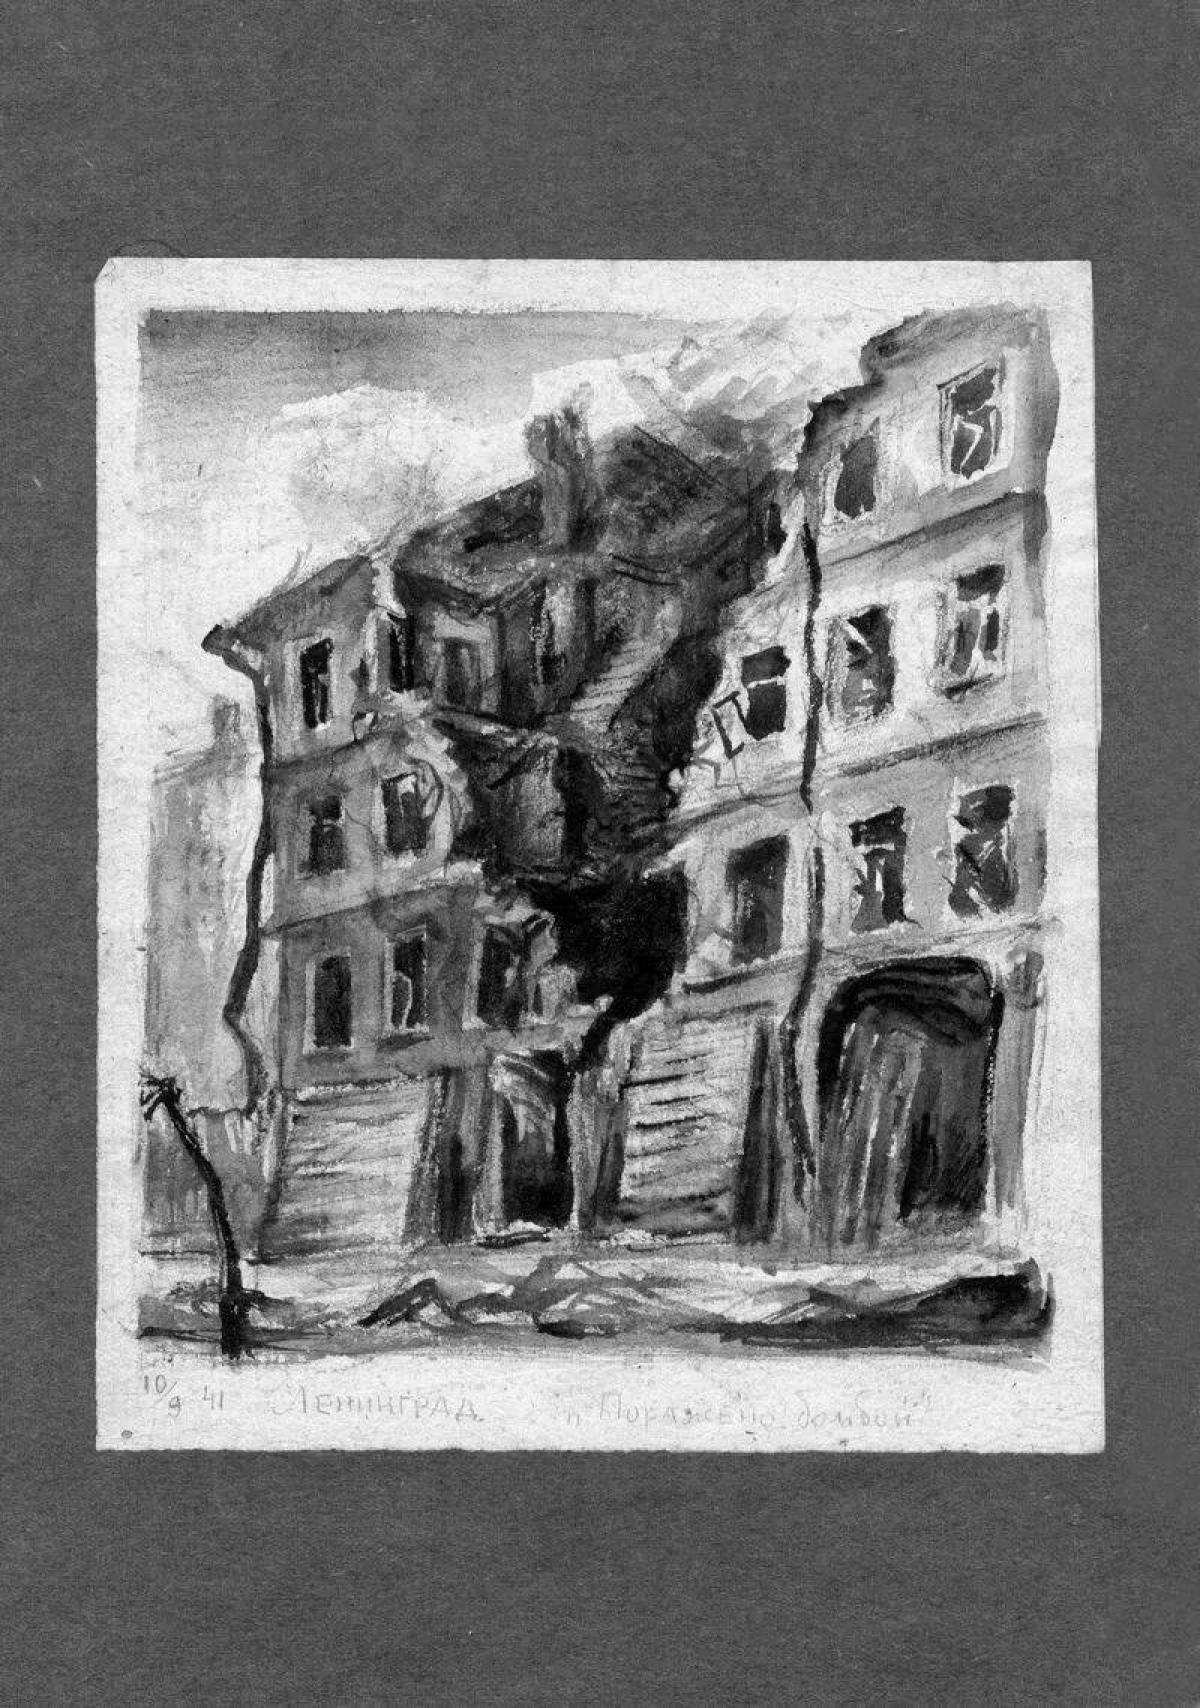 Captivating Stalingrad pavlov's house